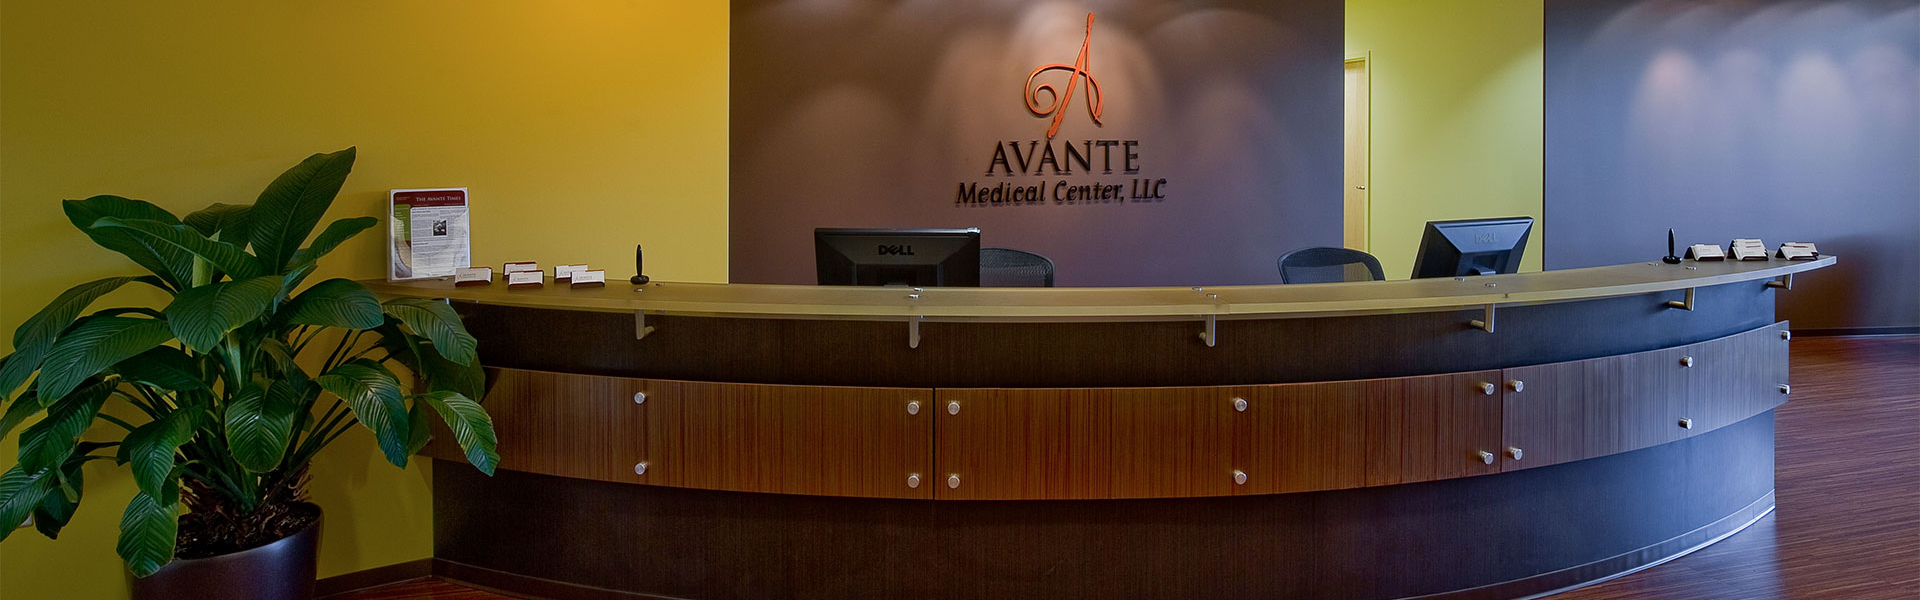 Front deck of avante medical center